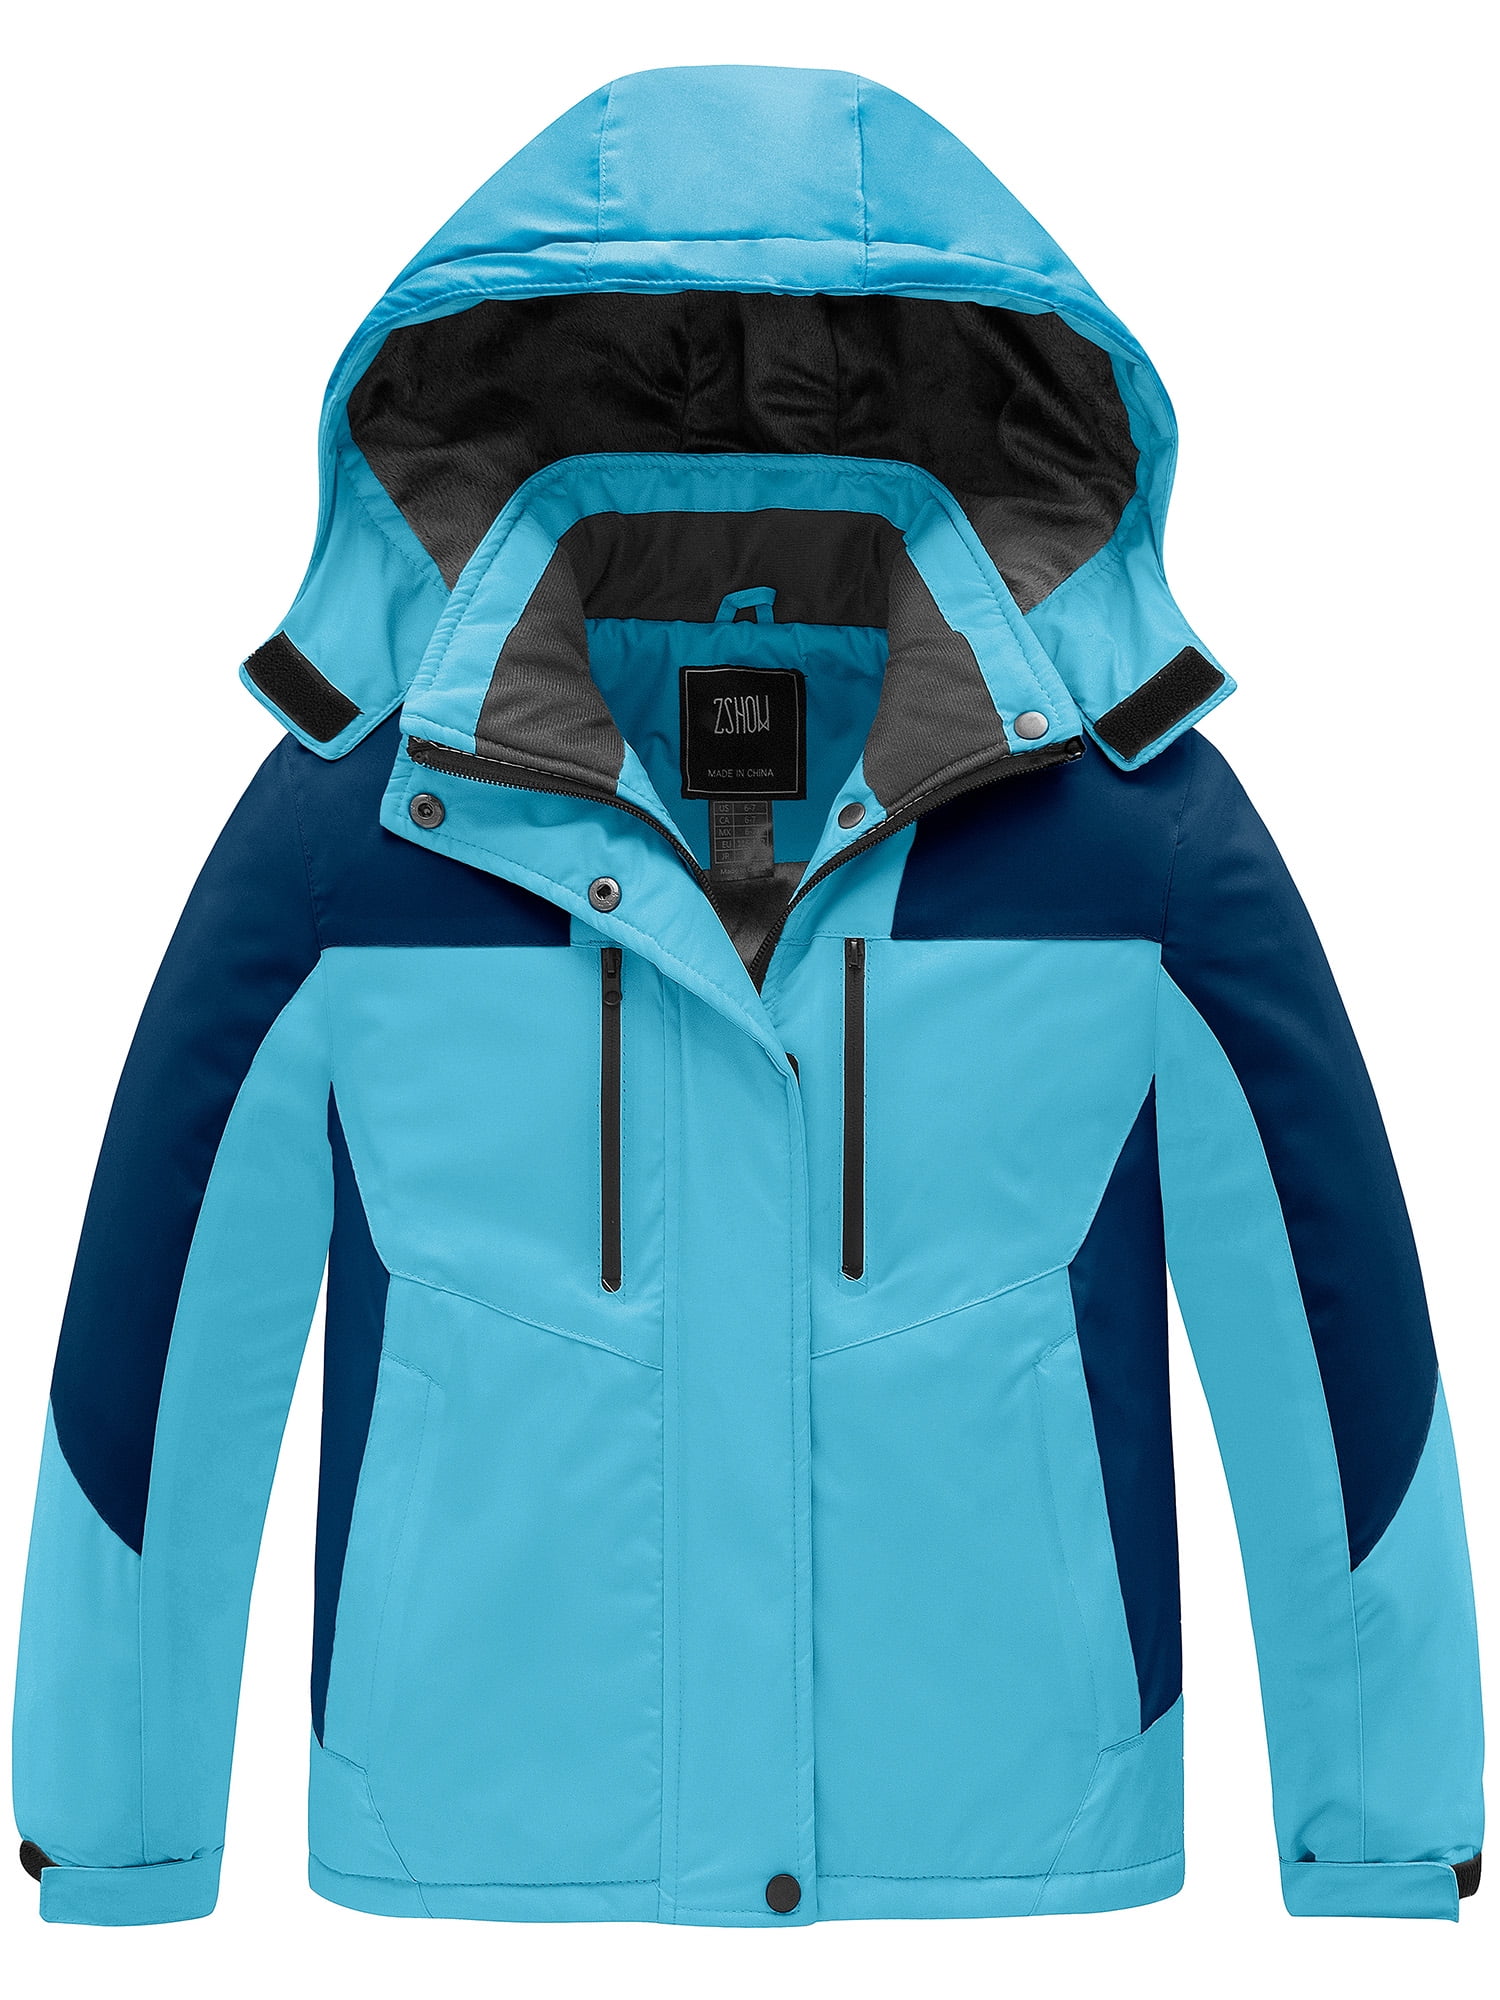 ZSHOW Girl's Ski Jacket Waterproof Winter Jacket Warm Fleece Rain Coat ...